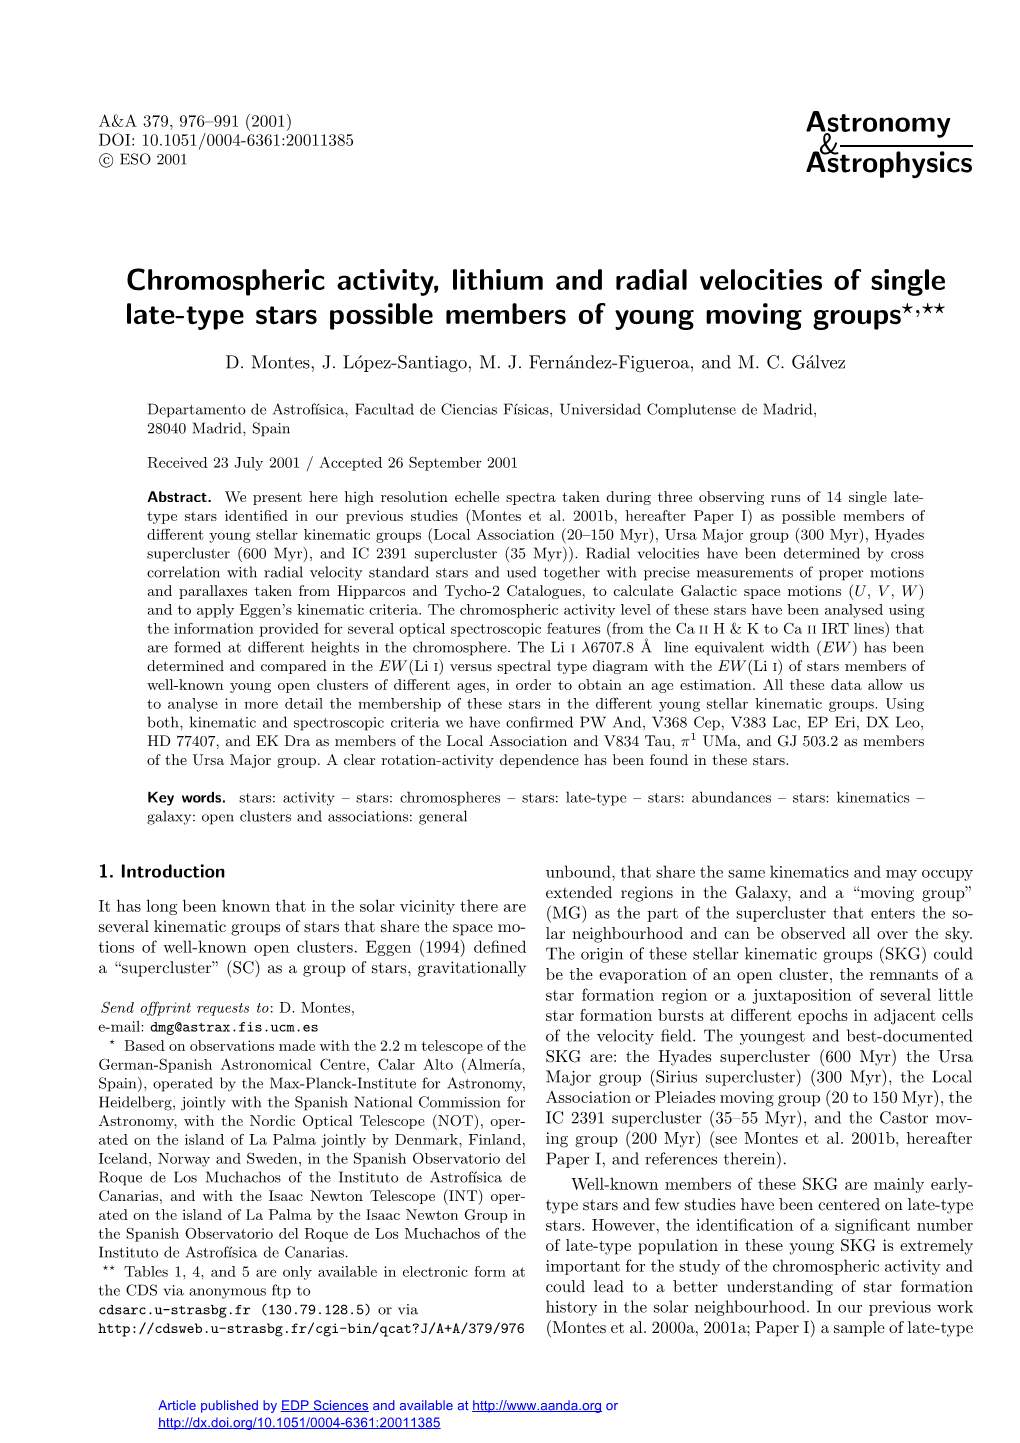 Astronomy & Astrophysics Chromospheric Activity, Lithium And